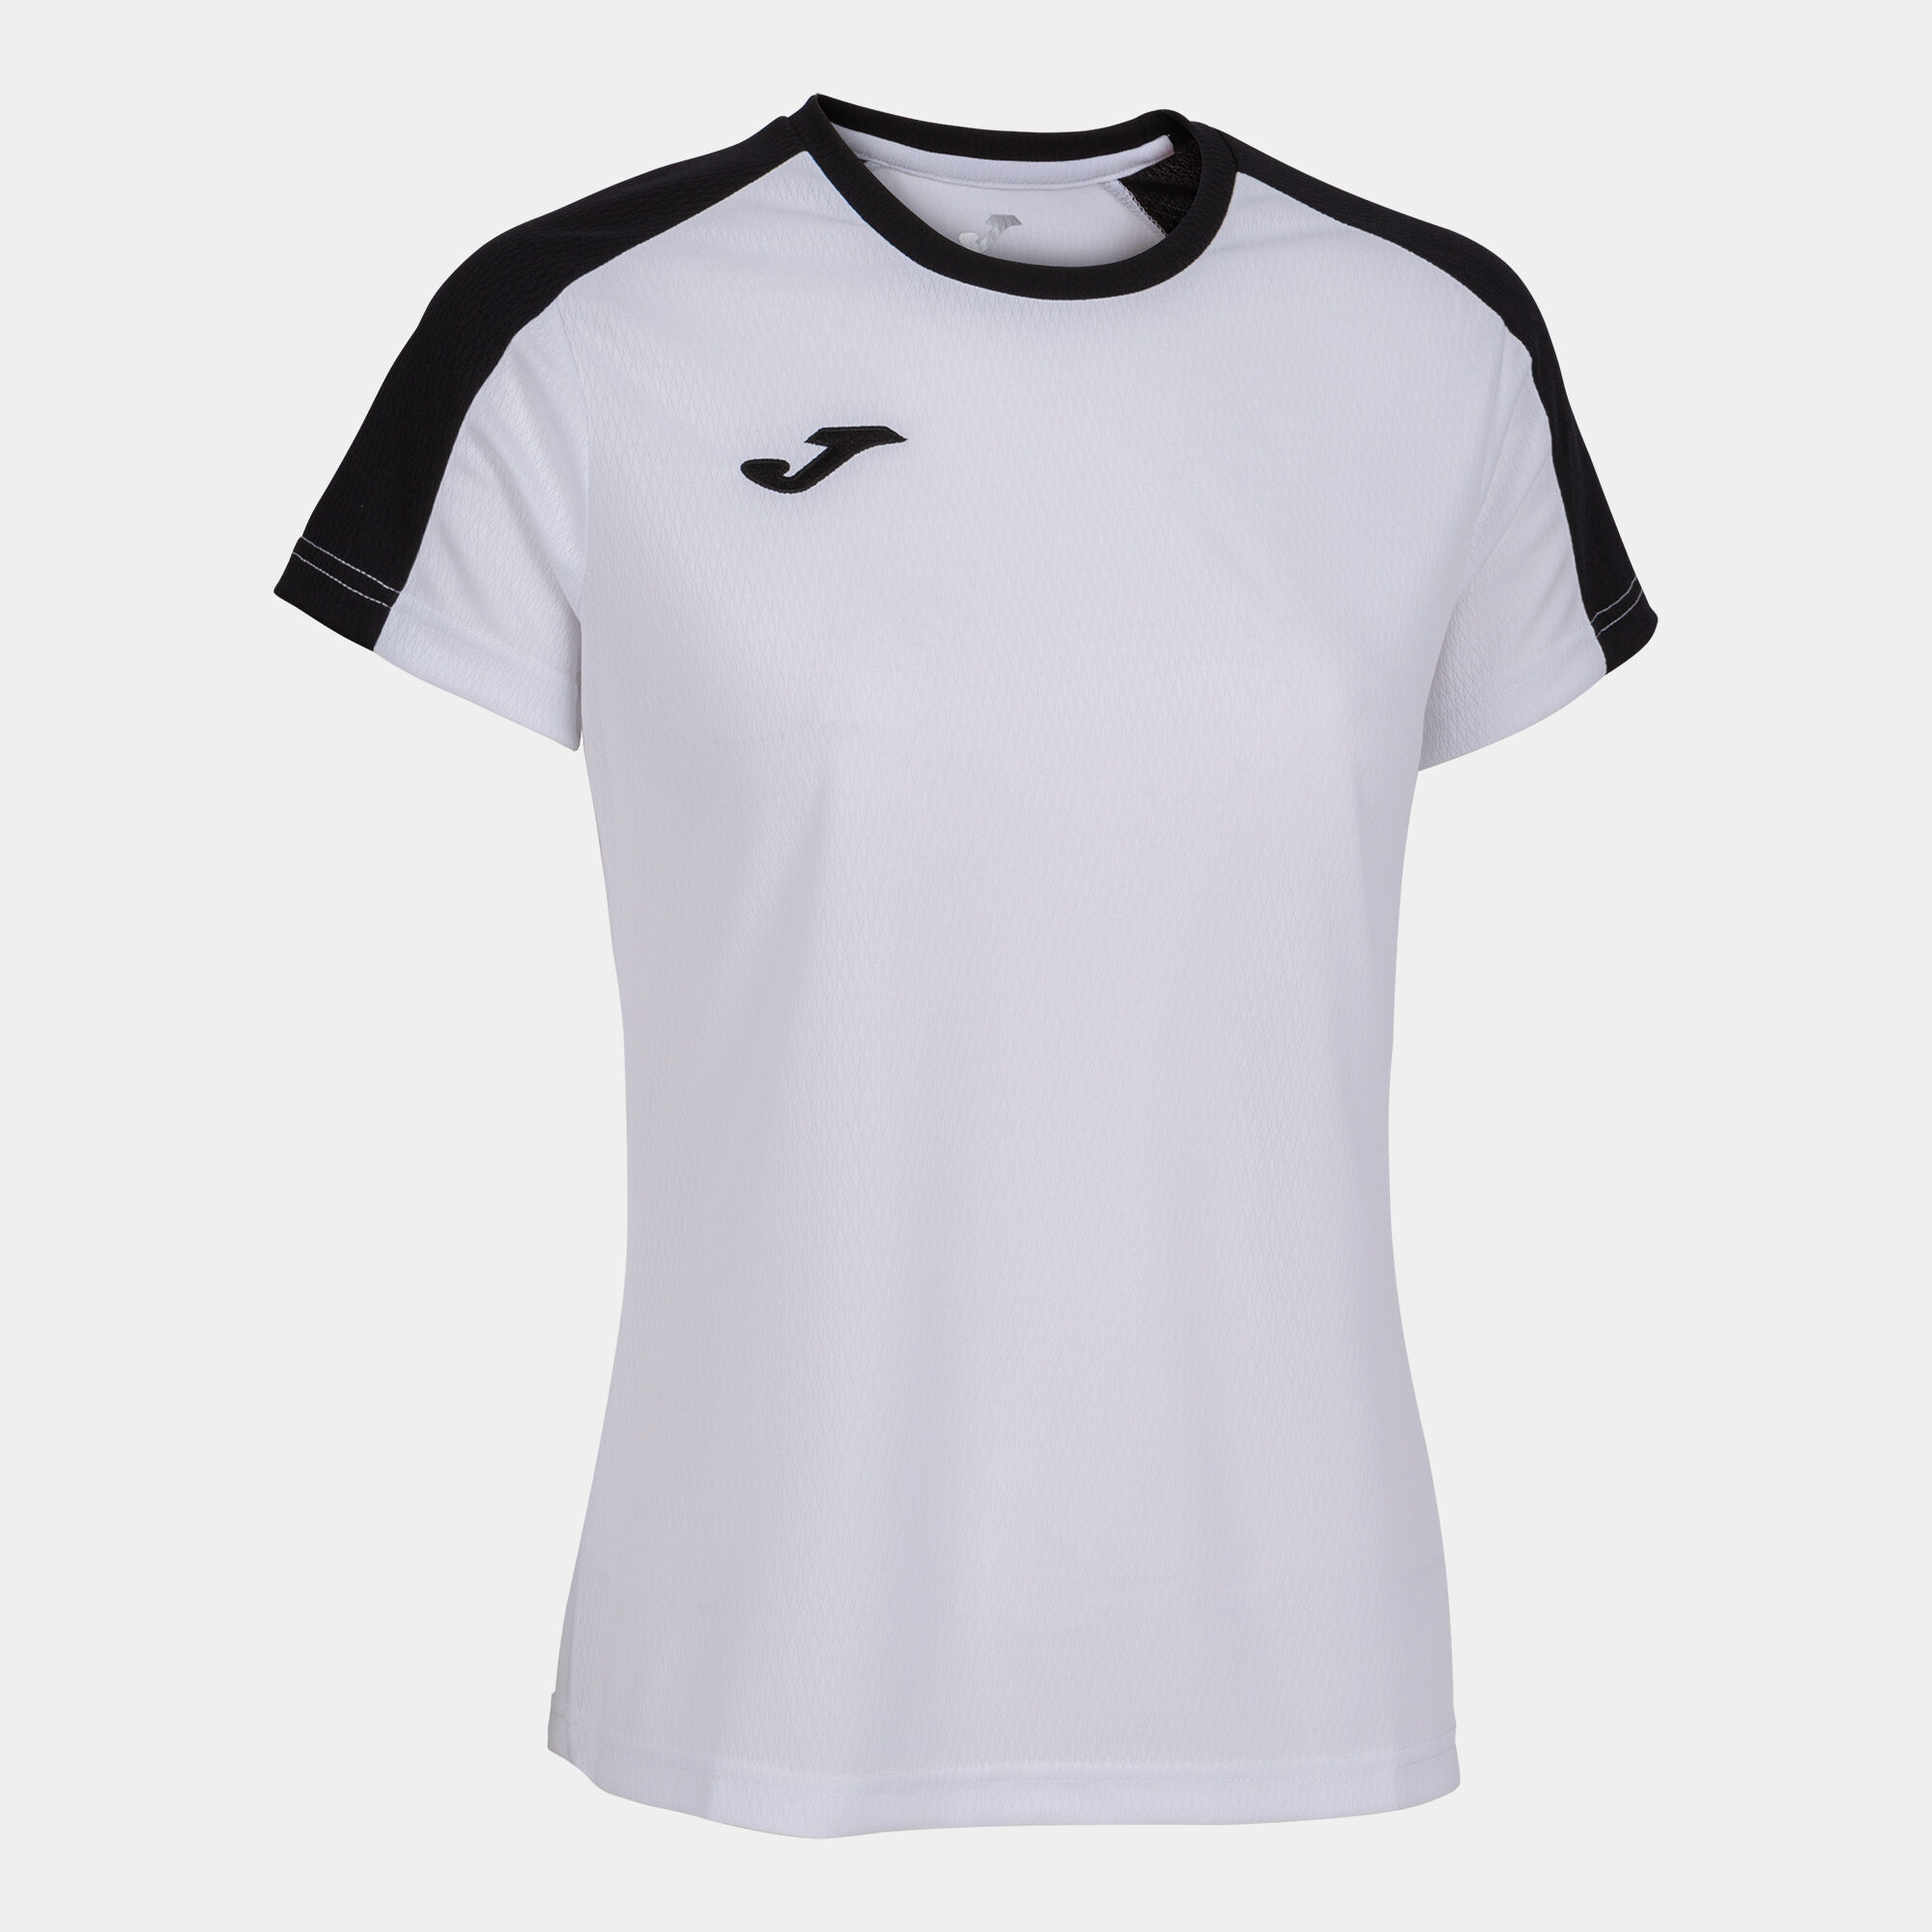 Camiseta manga corta mujer Eco Championship blanco negro